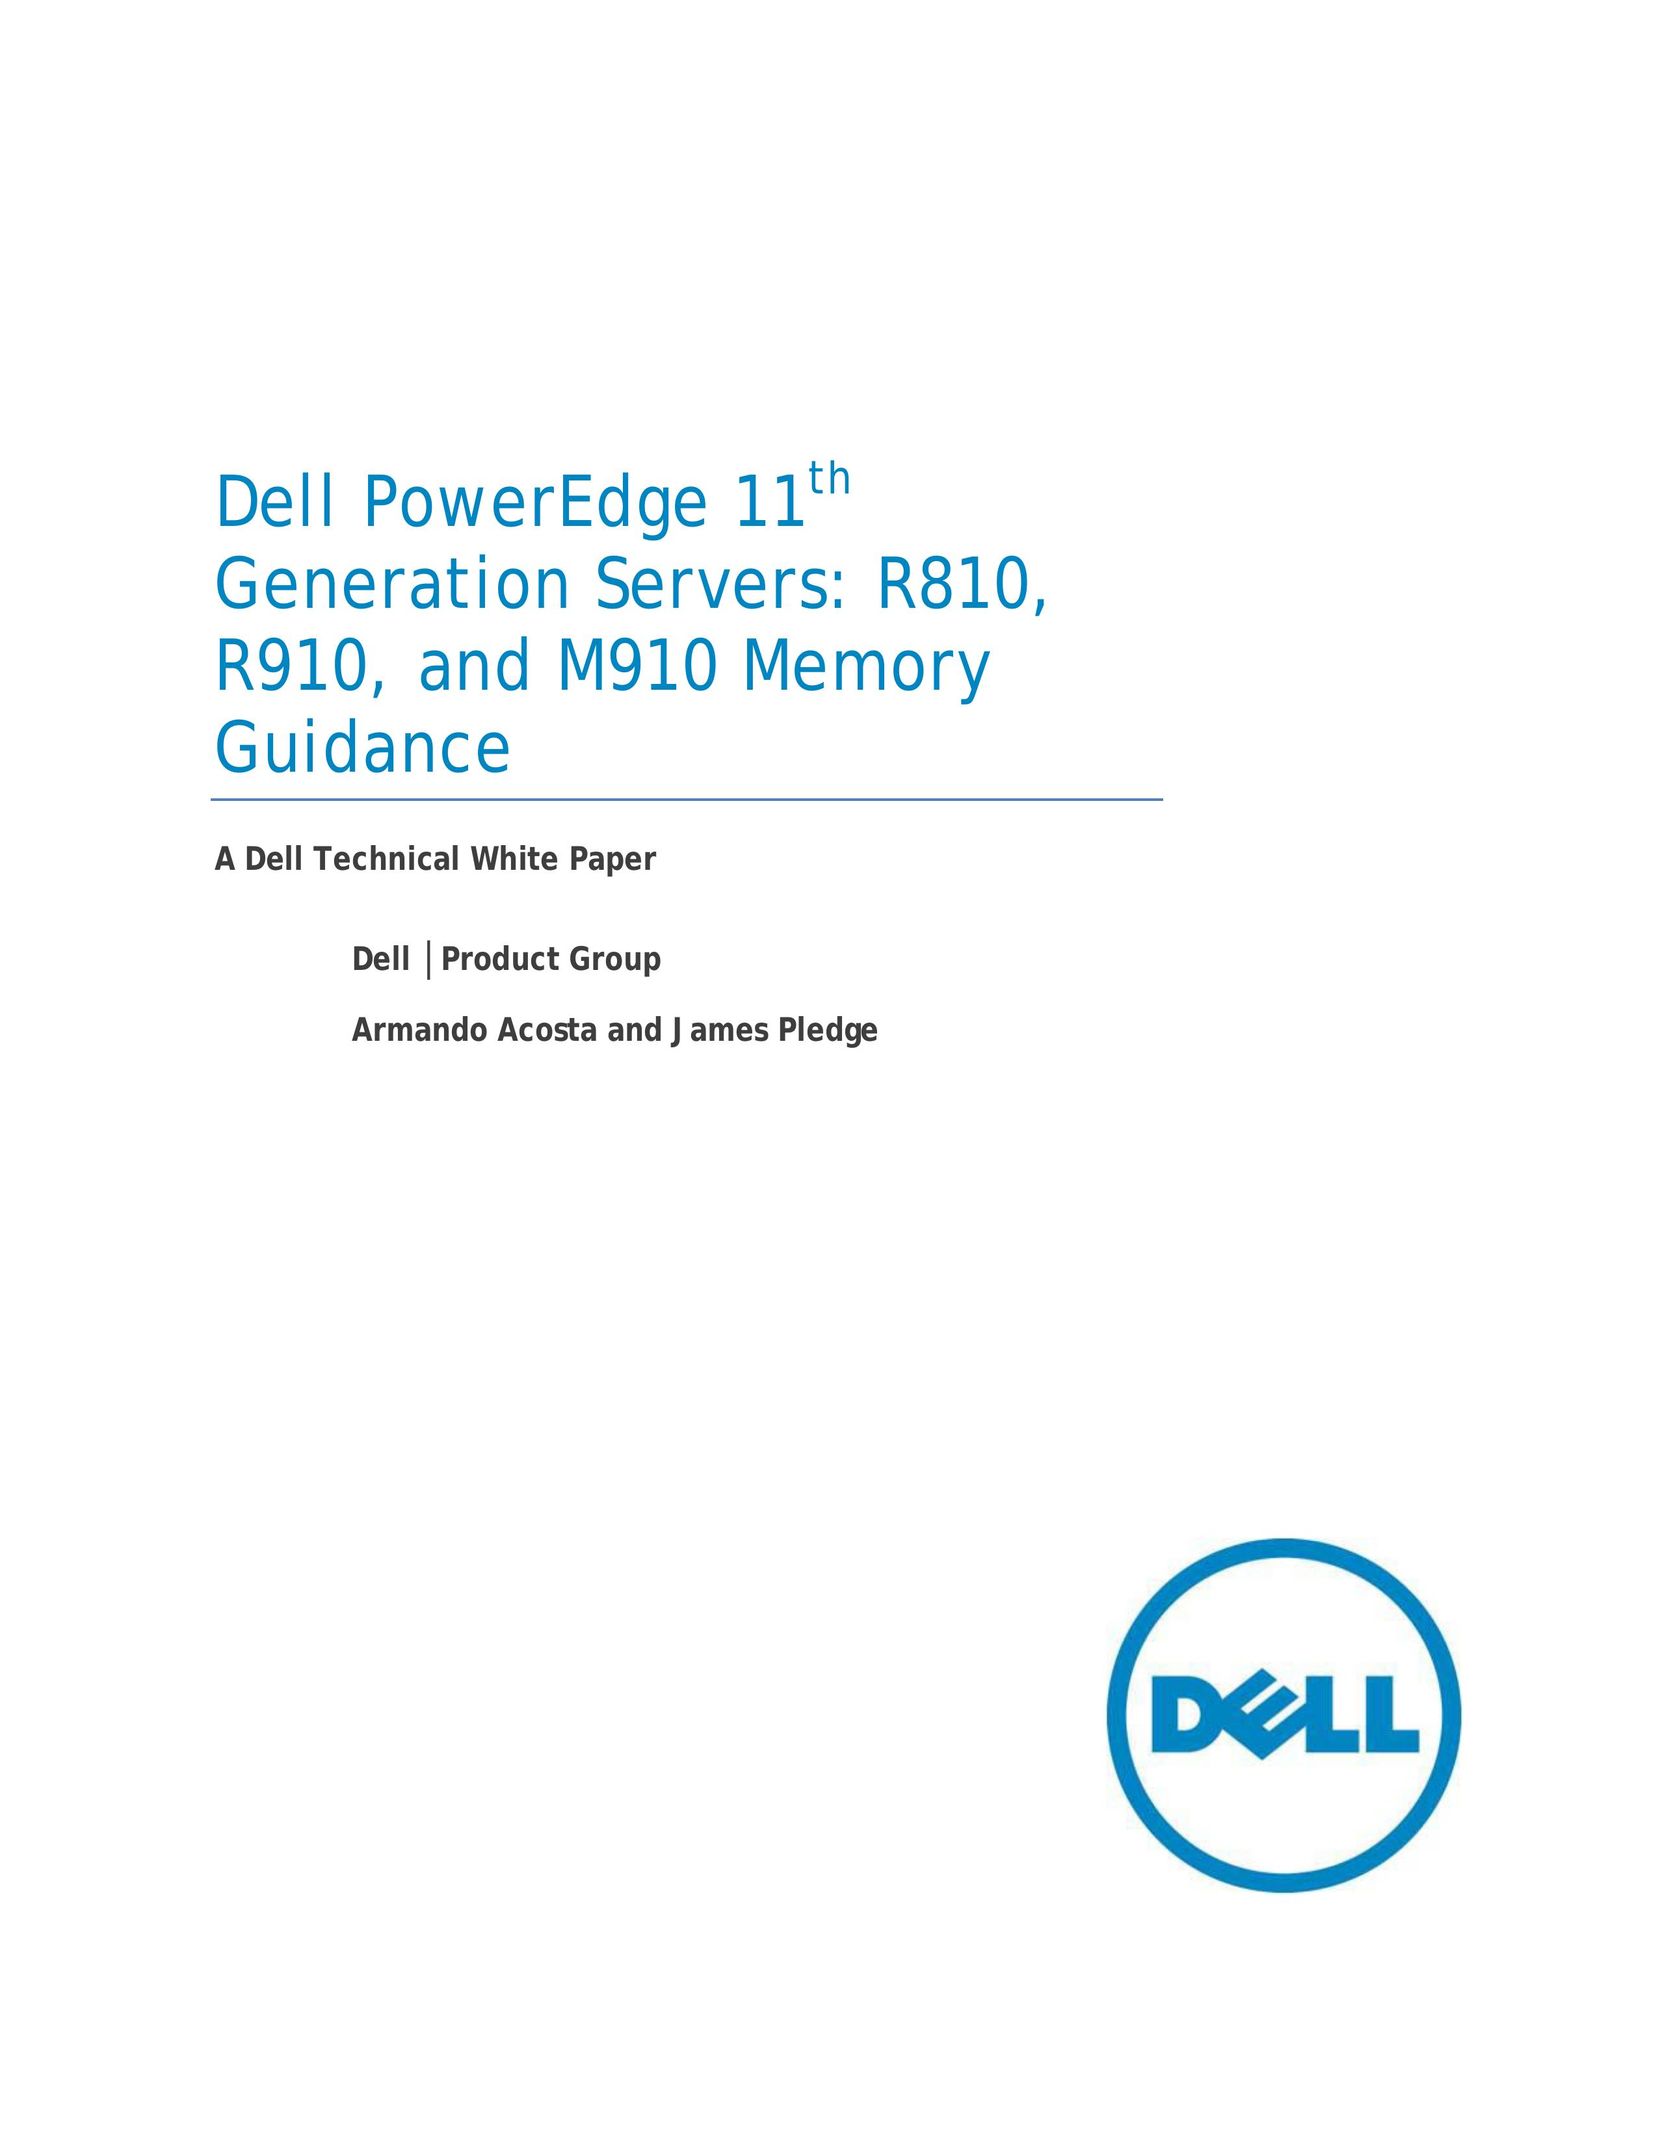 Dell R810 Home Theater Server User Manual